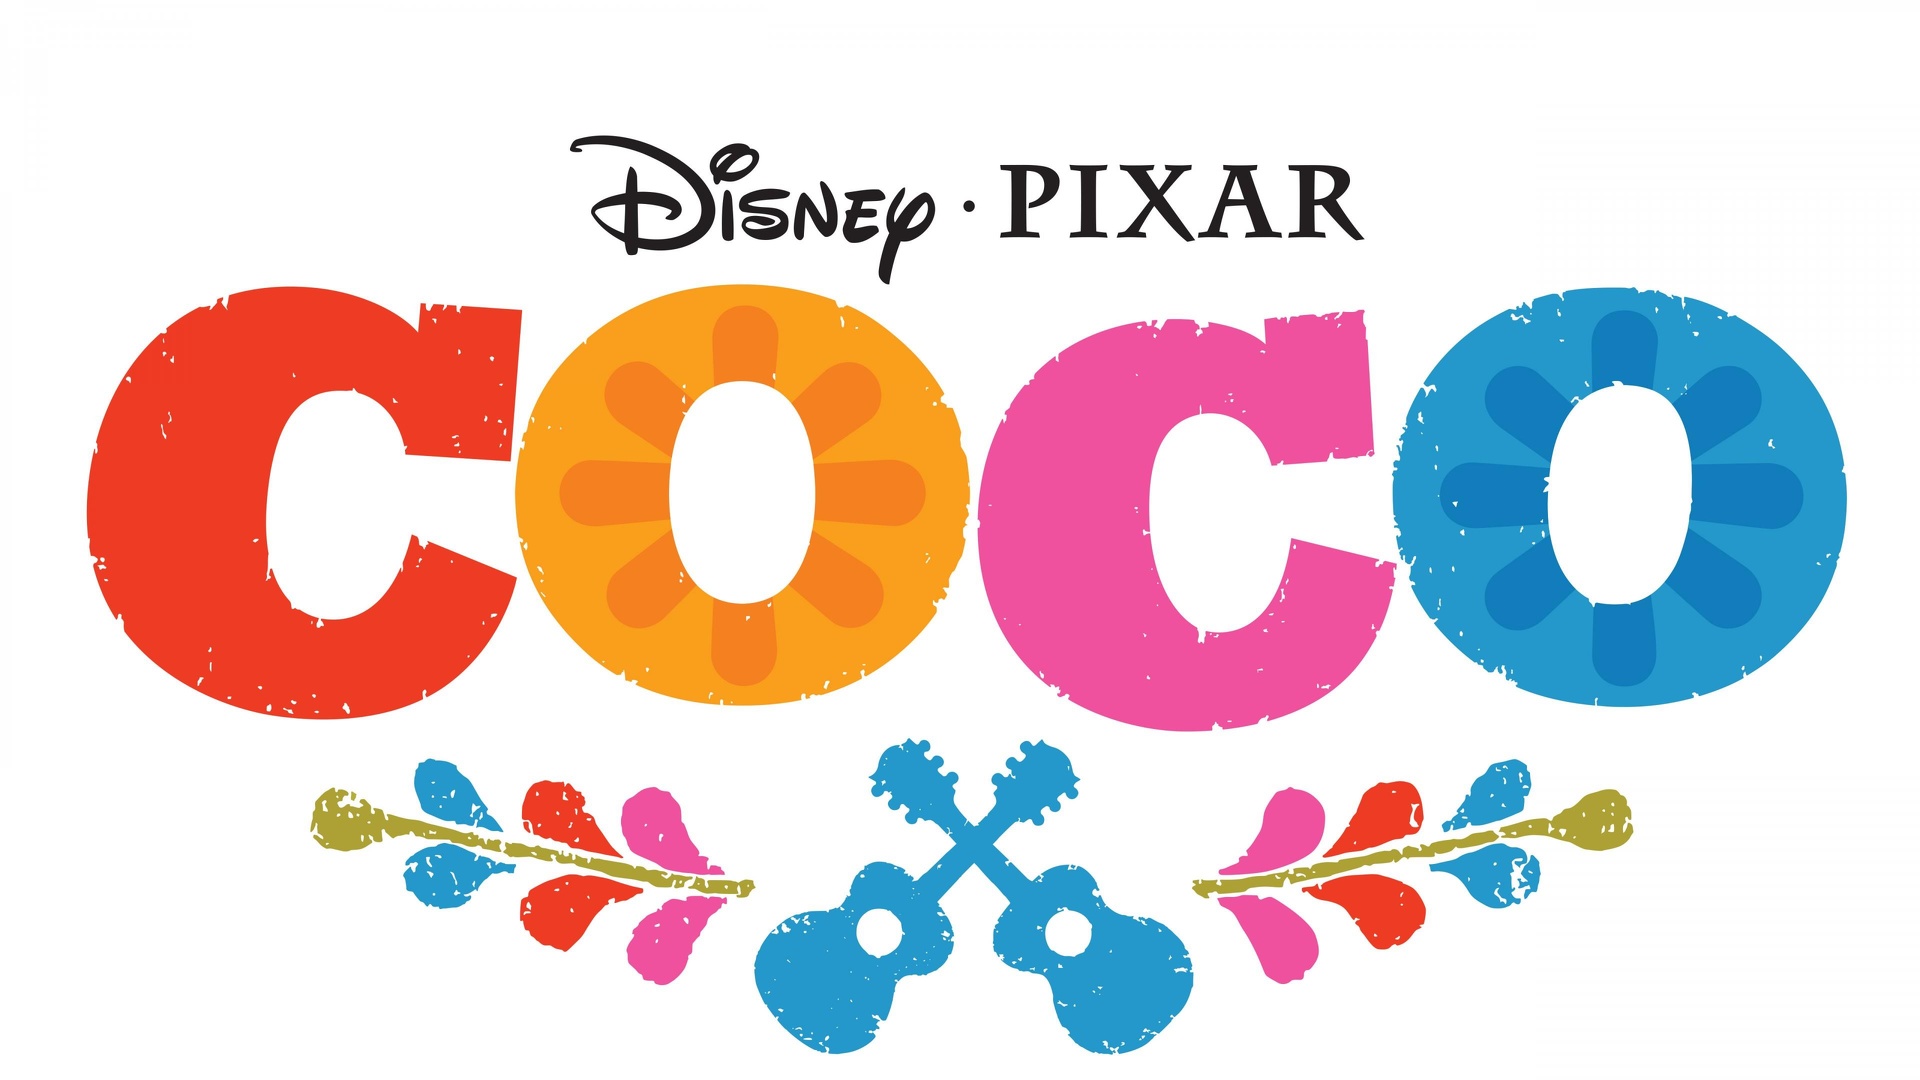 Coco - Disney Pixar.jpg